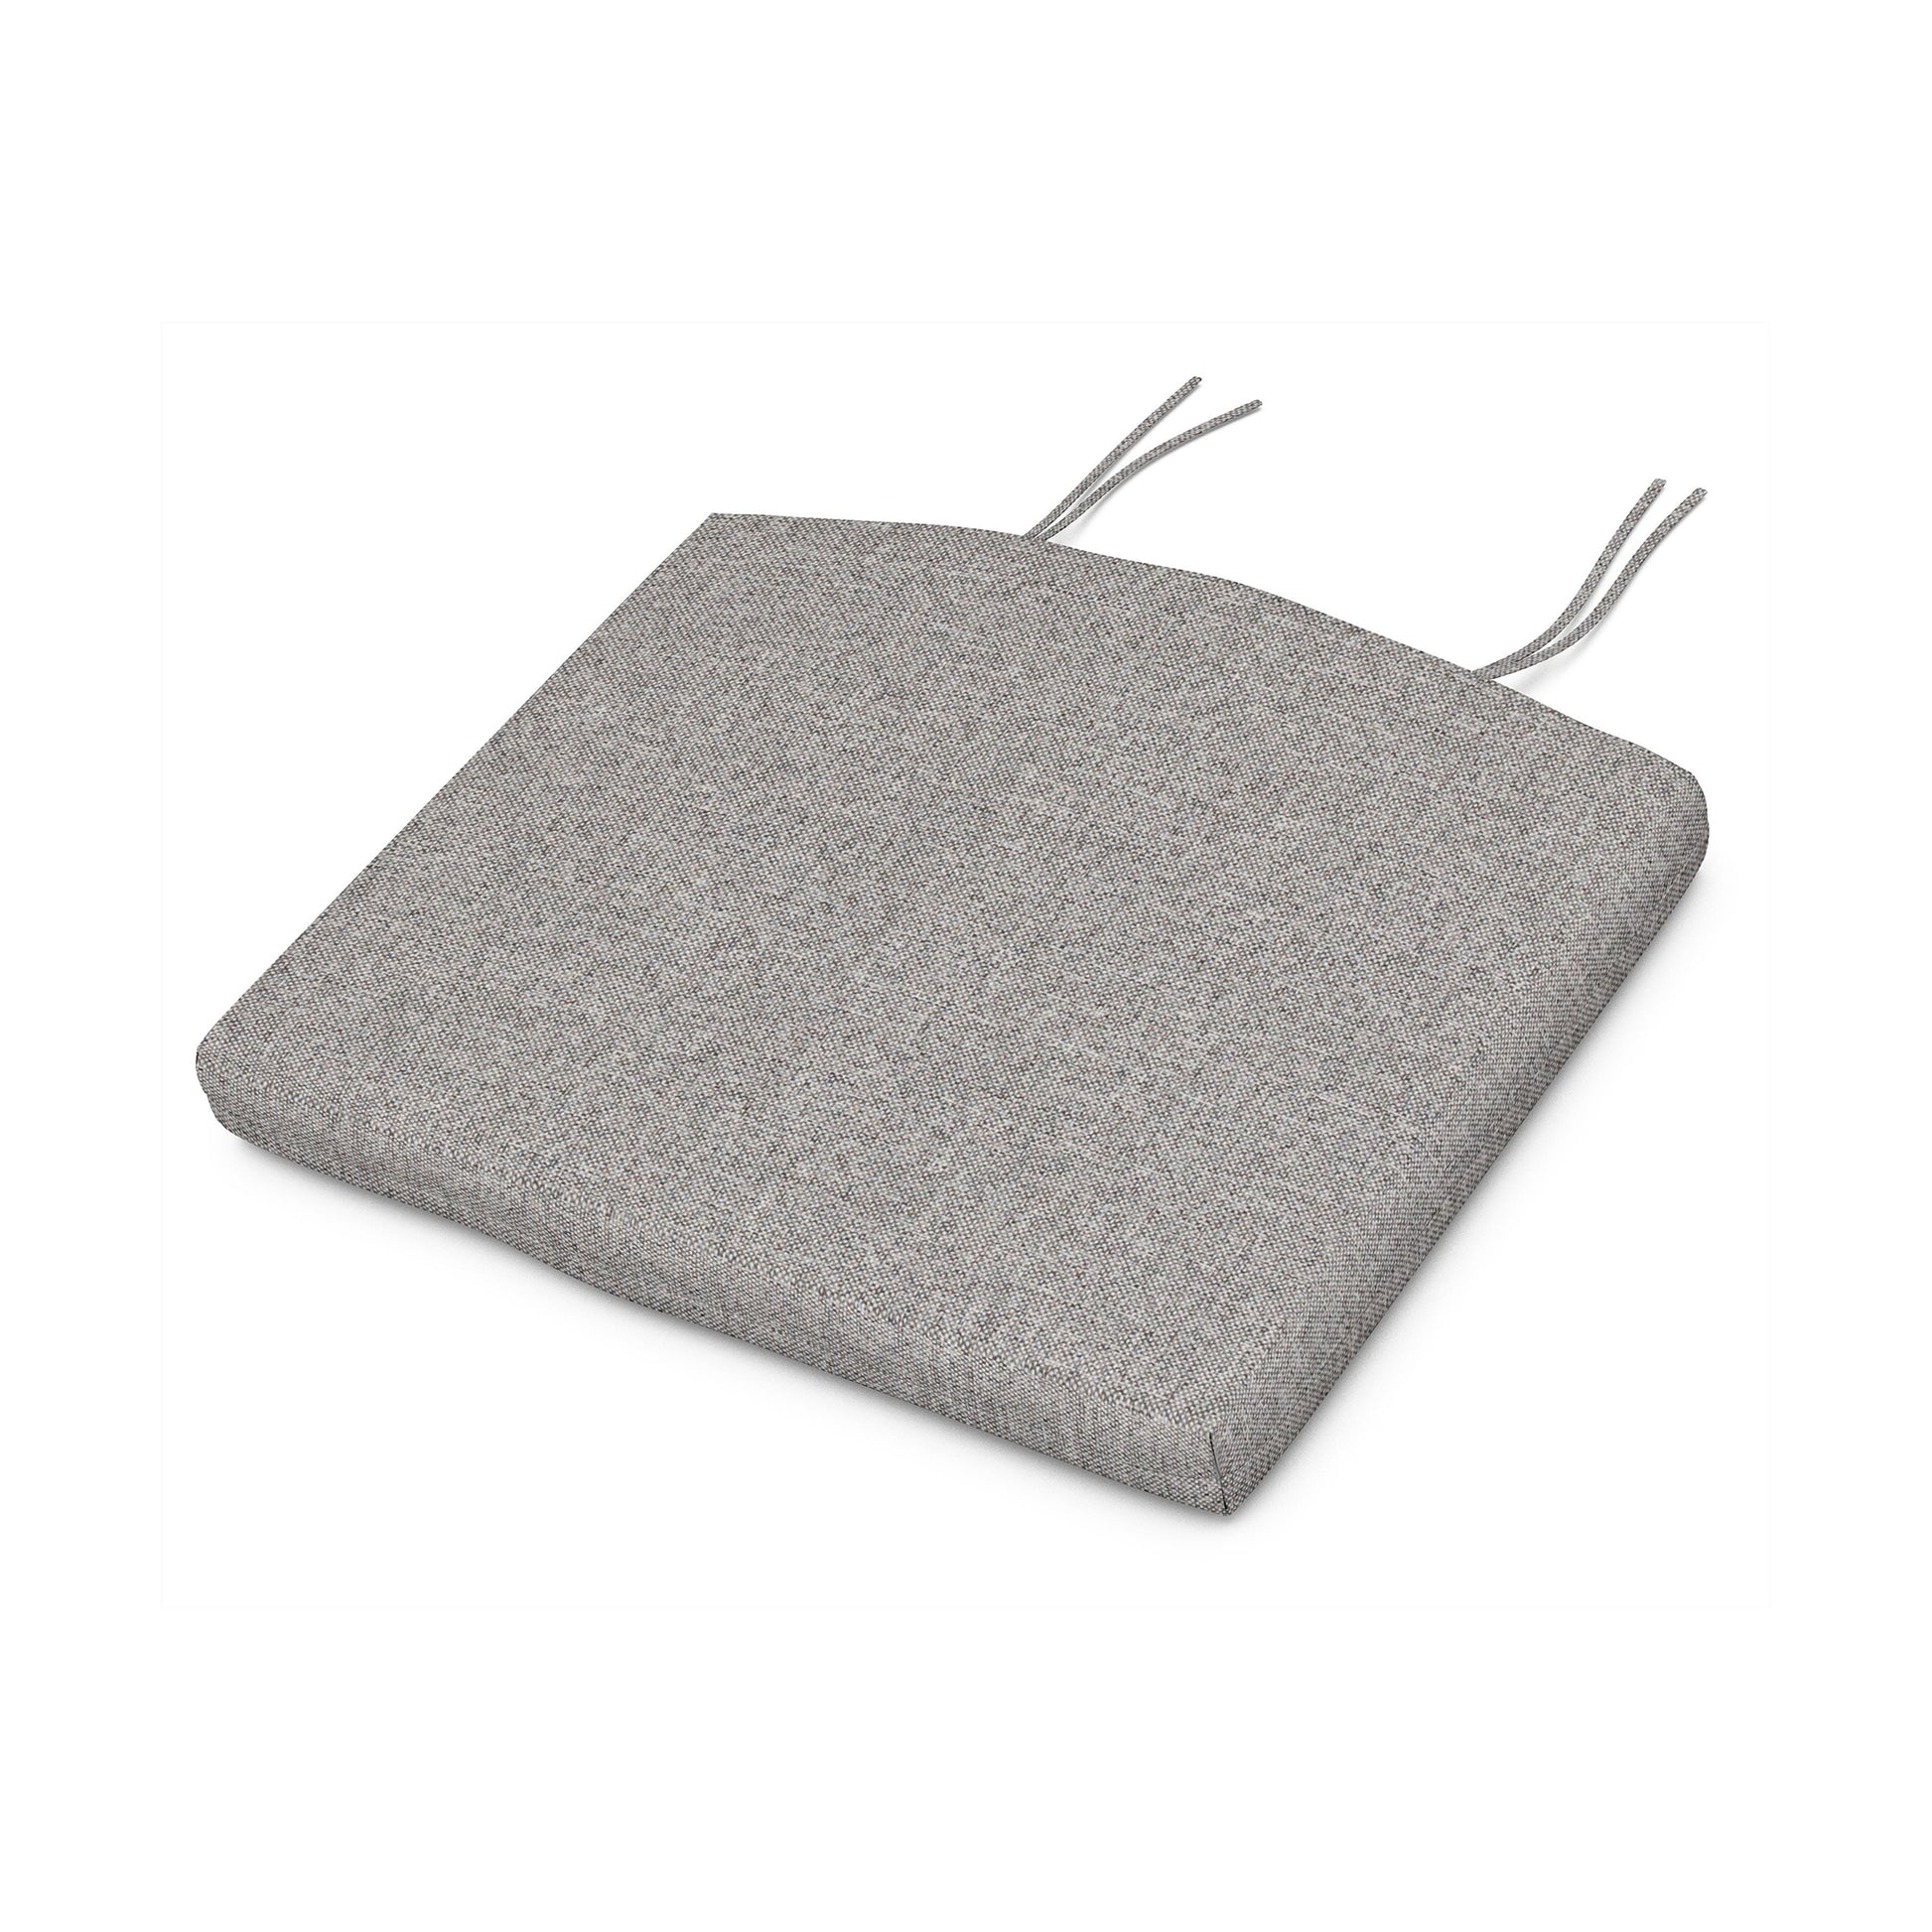 A grey XPWS0003 - POLYWOOD seat cushion on a white background.